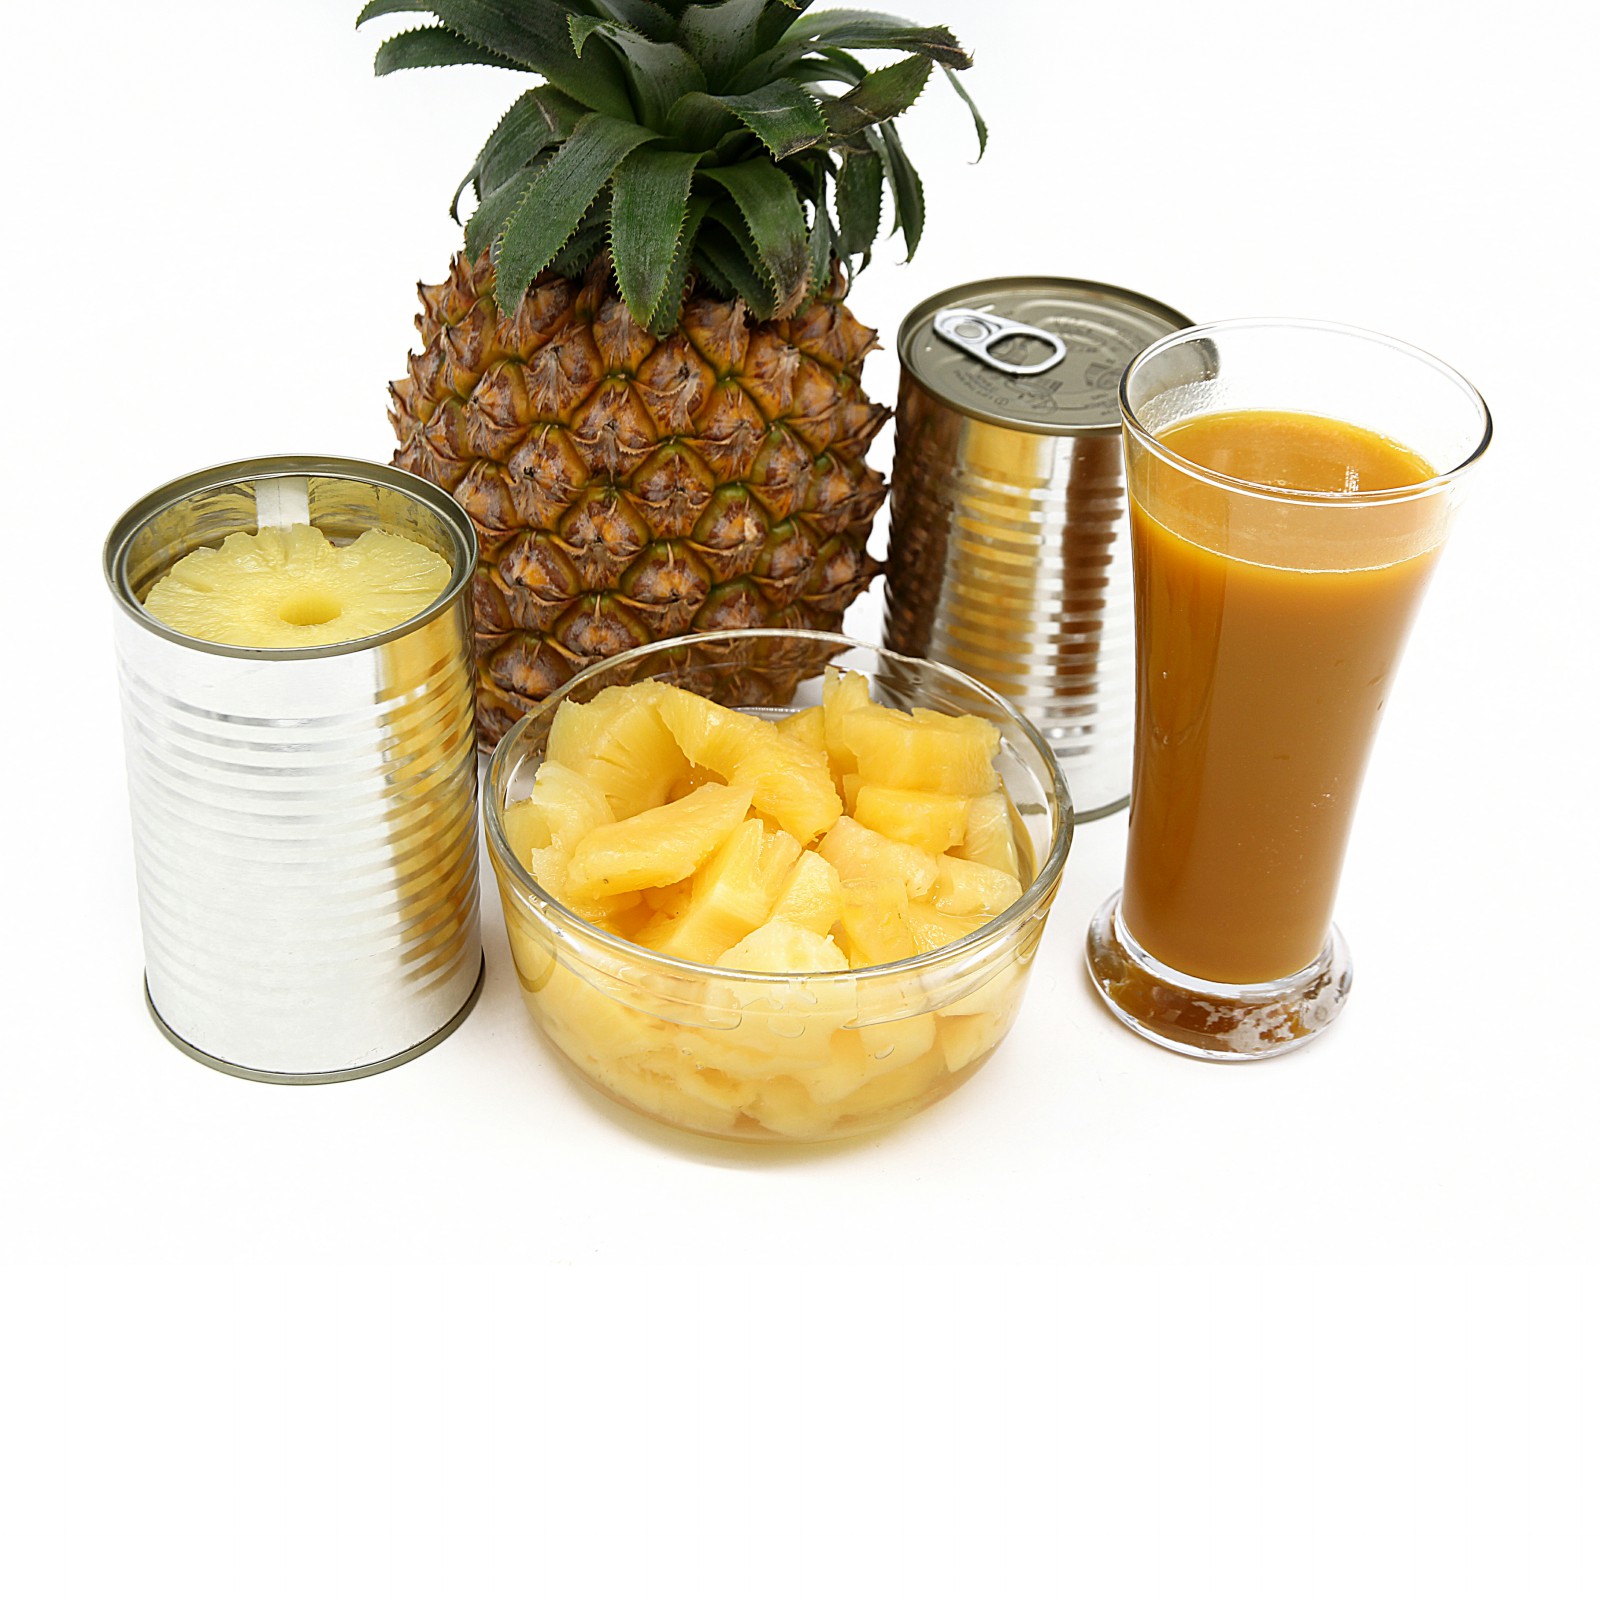 Canned pineapple chunks